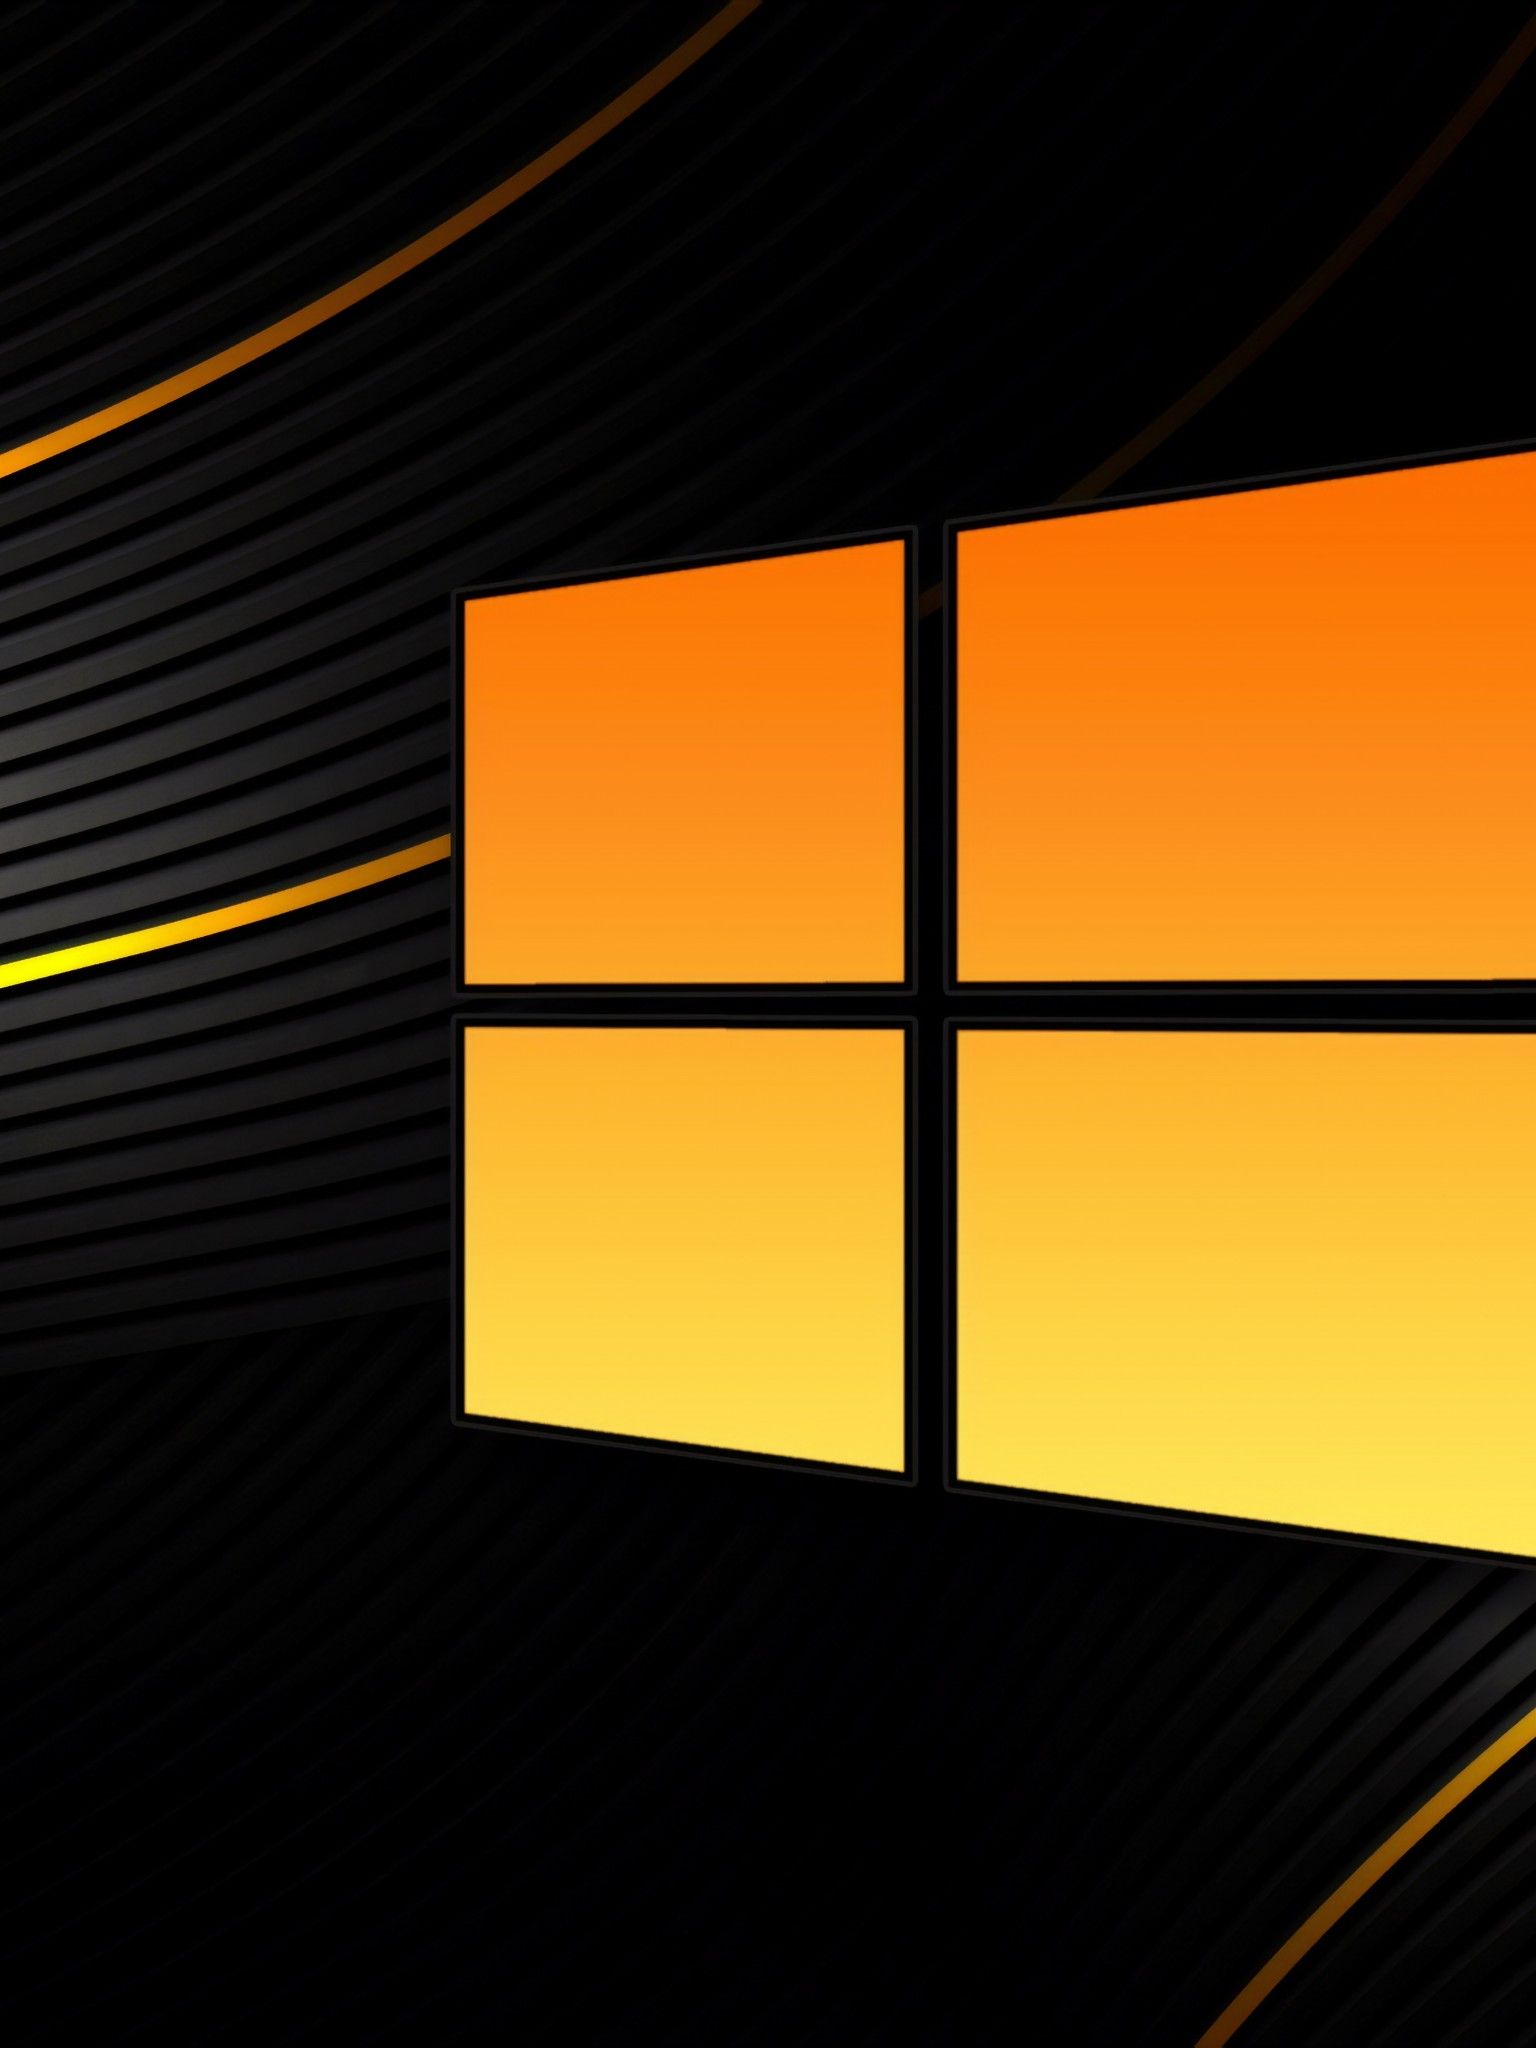 Windows 10 4K Wallpaper, Black background, Abstract, Yellow, 5K, 8K, Technology